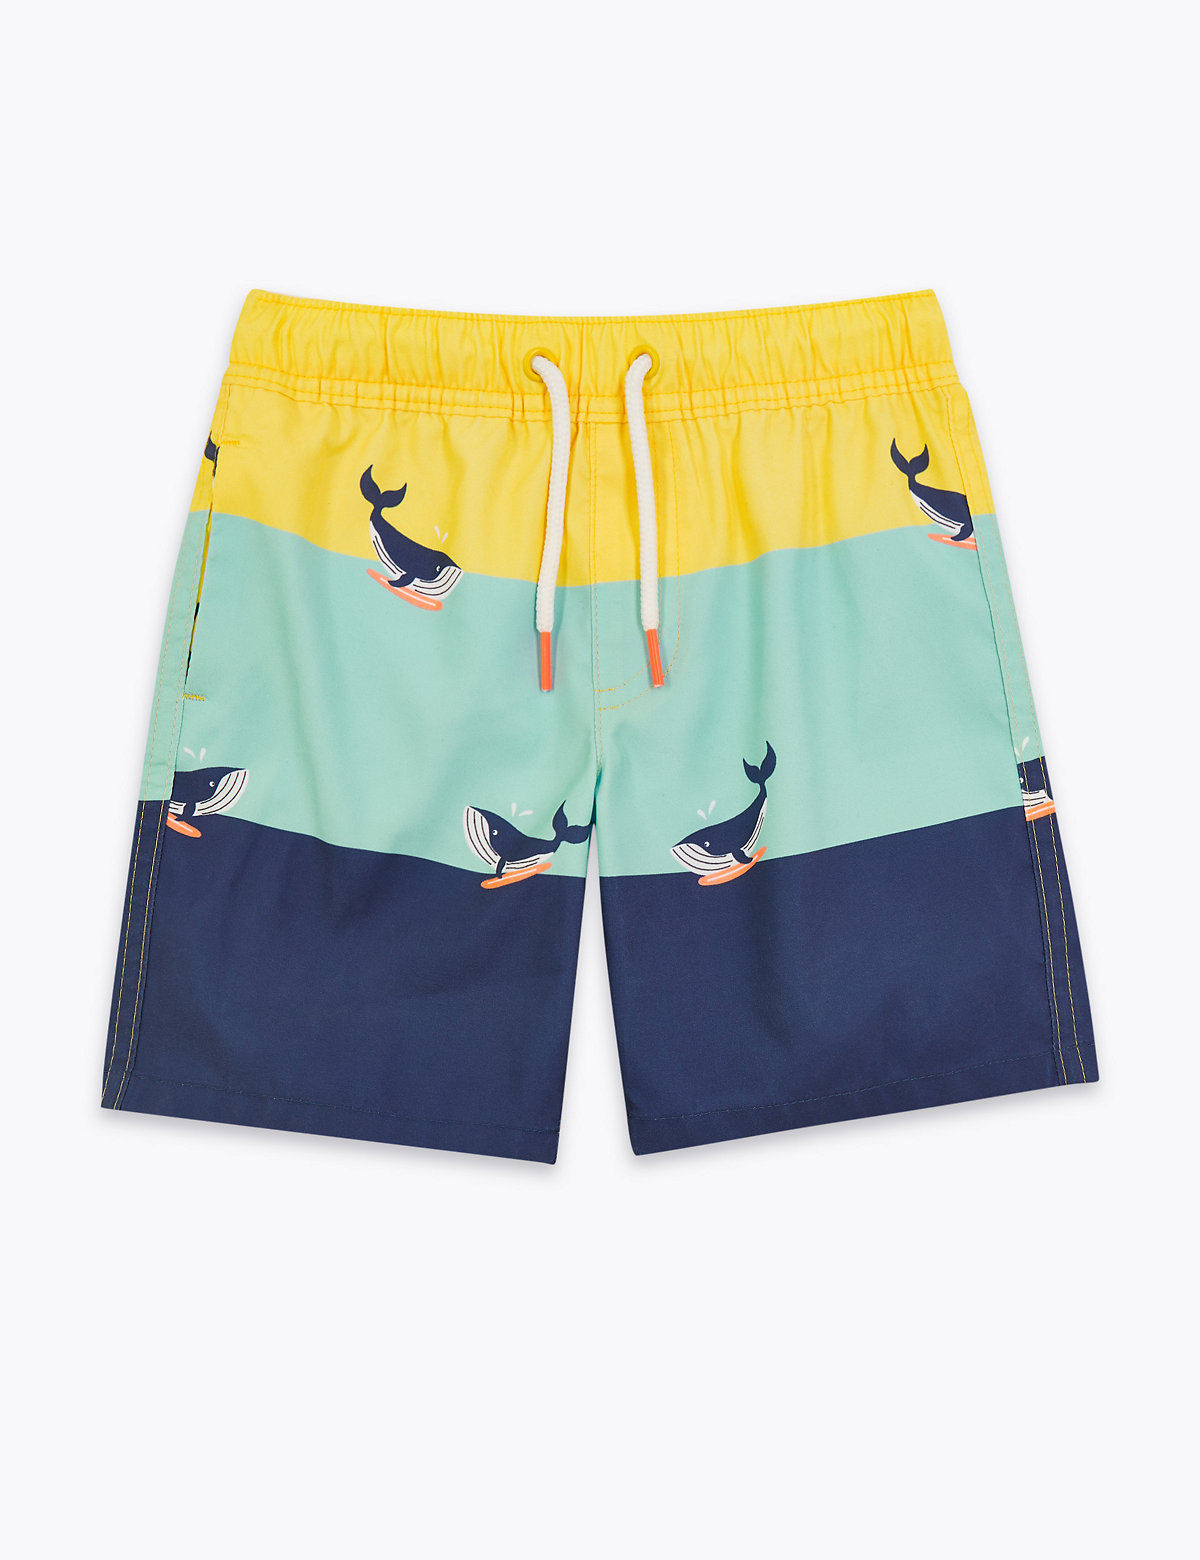 Whale Swim Shorts (2-7 Yrs)